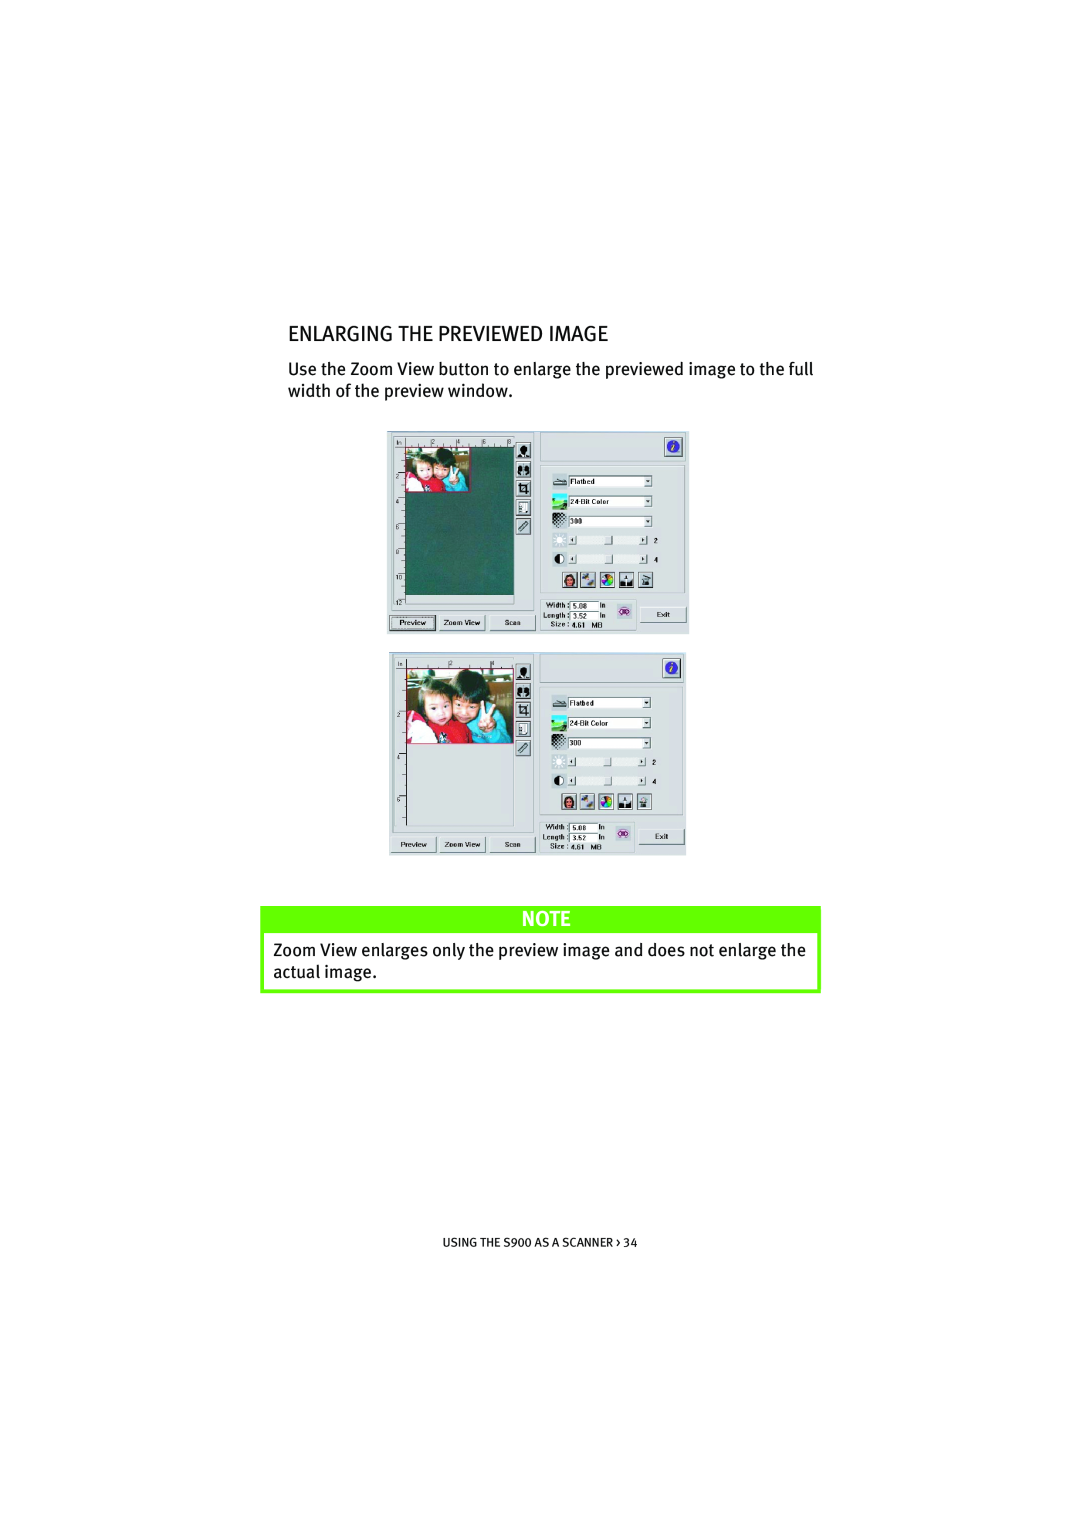 Oki S900 manual Enlarging The Previewed Image 